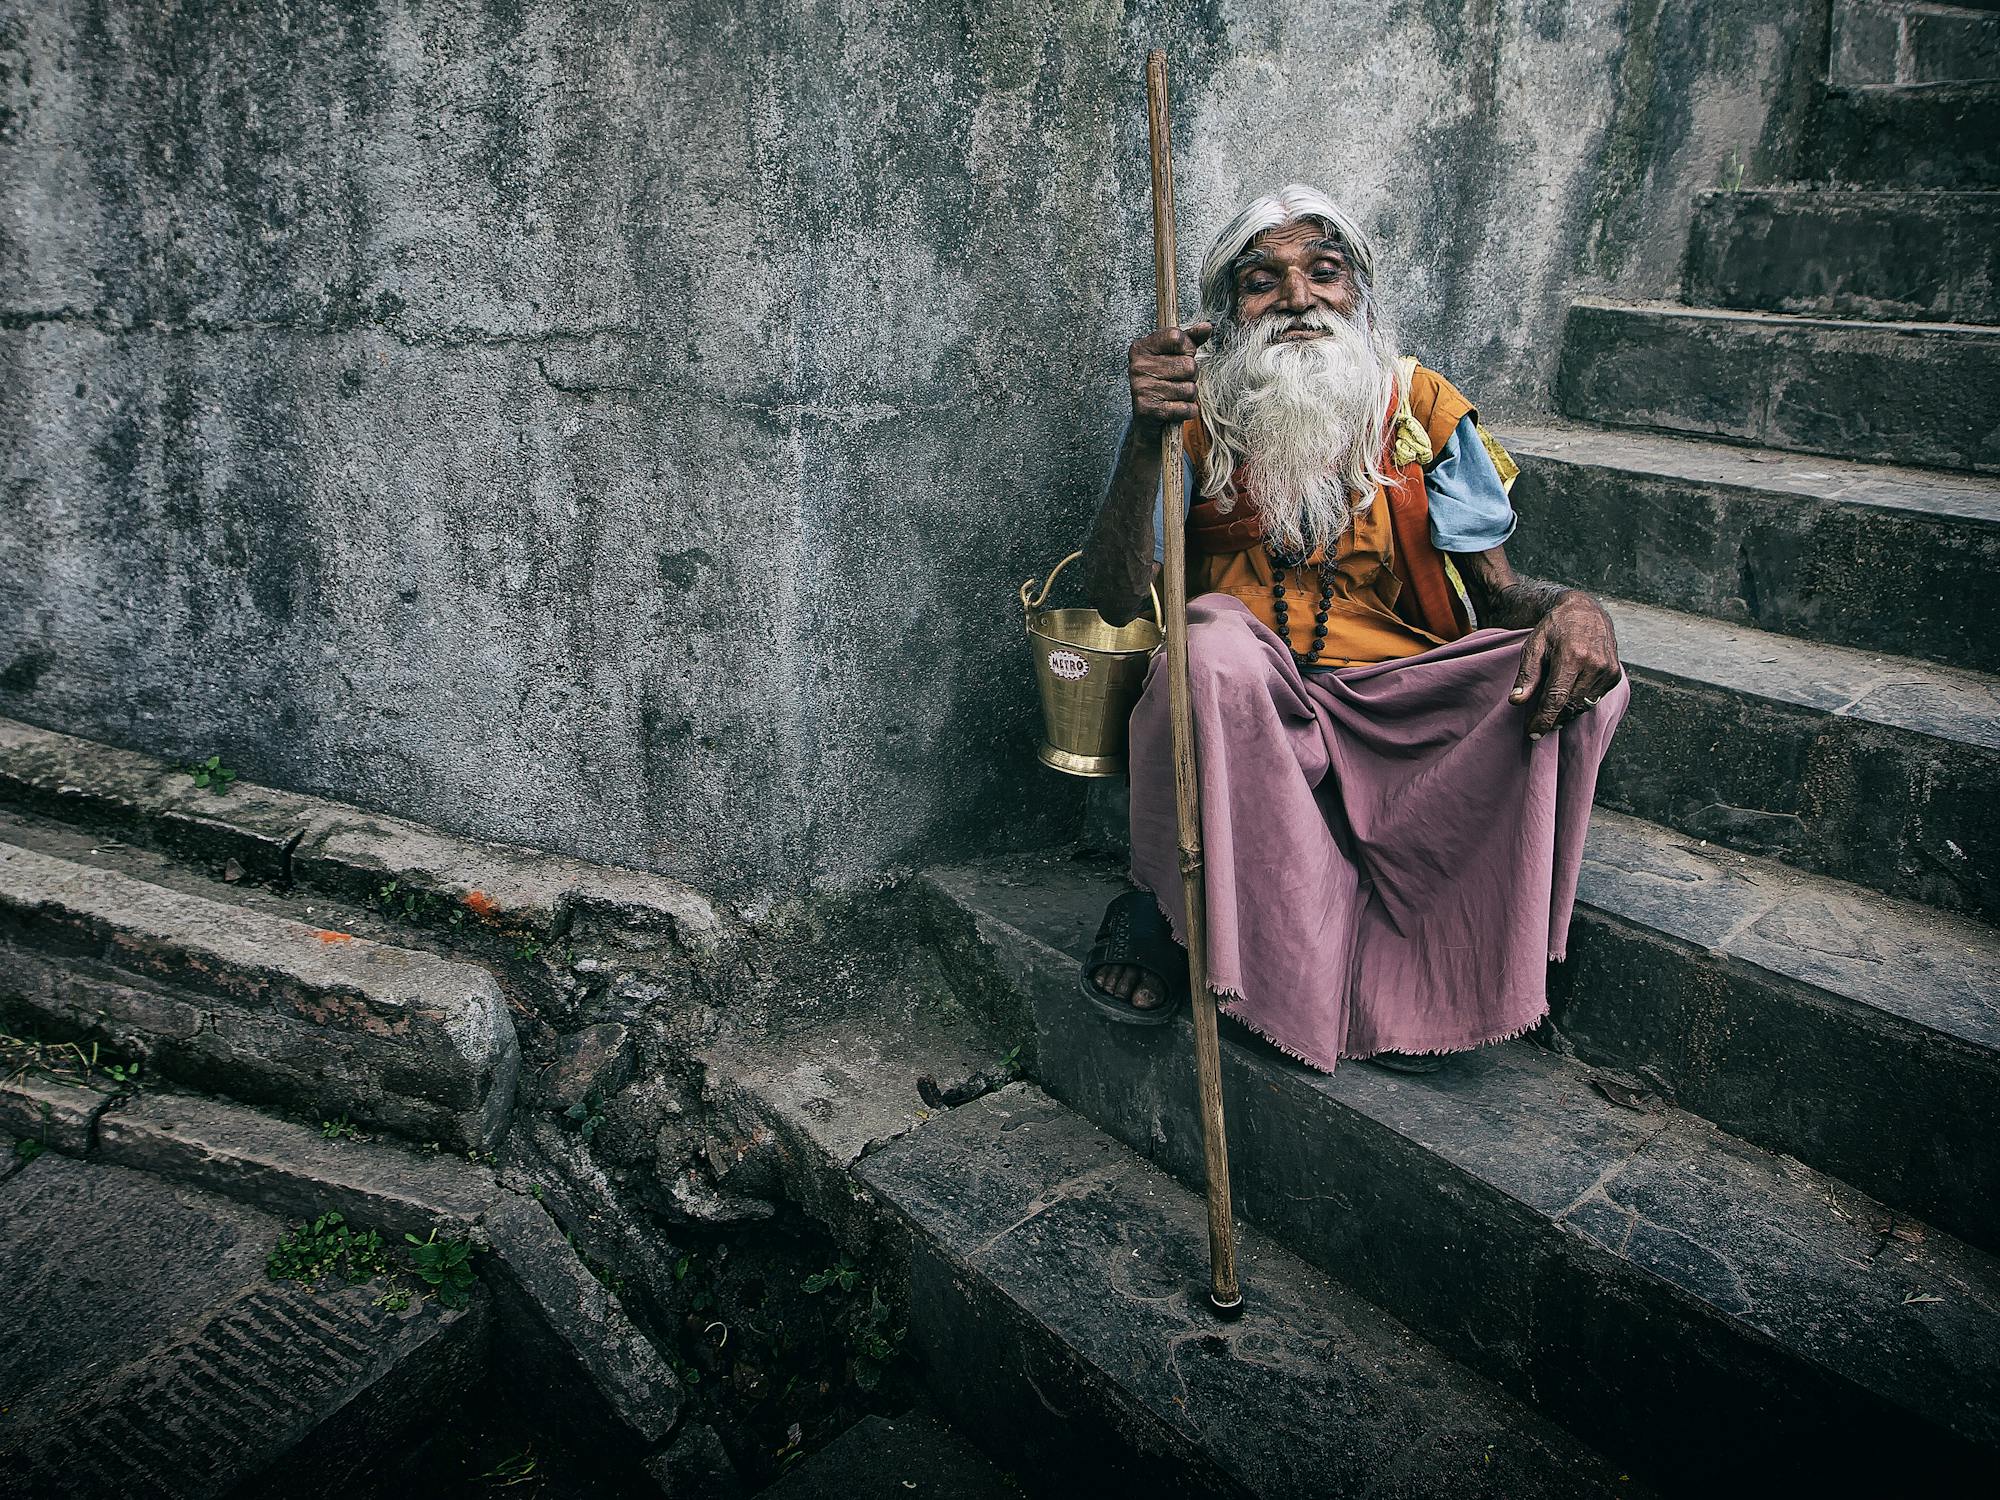 Hindu Saint Photo by Mehmet Turgut  Kirkgoz  from Pexels: https://www.pexels.com/photo/senior-ethnic-man-in-traditional-wear-sitting-on-steps-4912651/